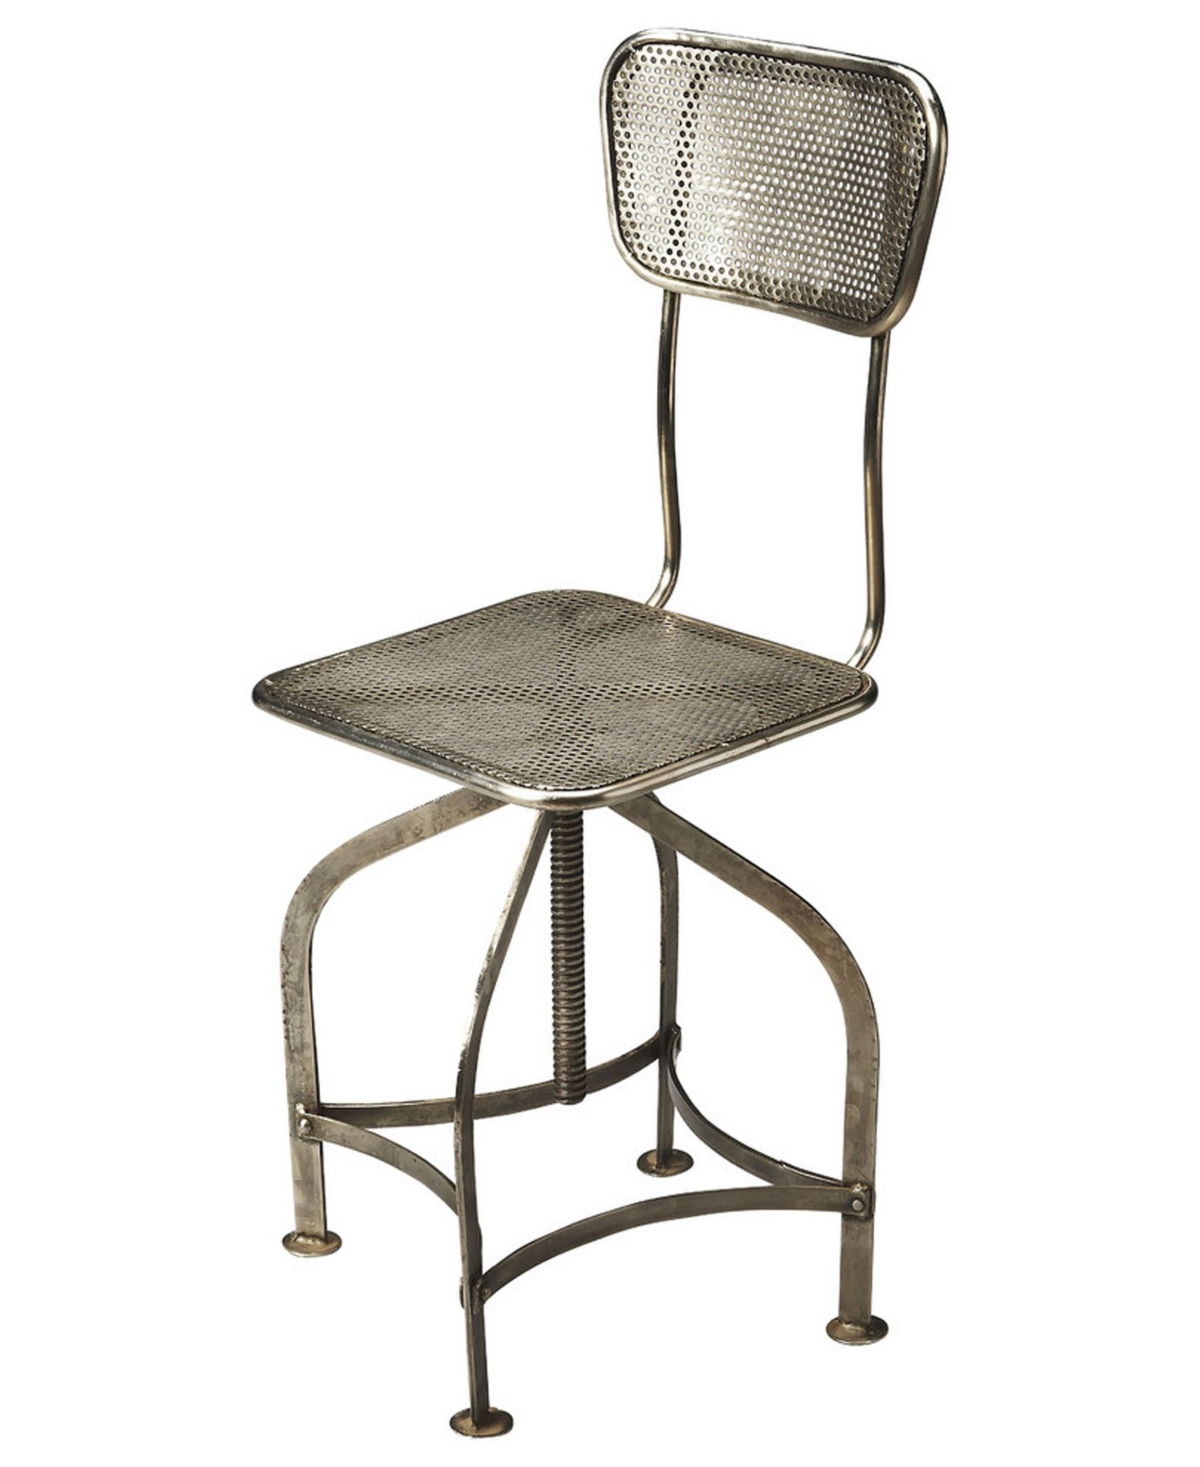 Butler Pershing Swivel Chair